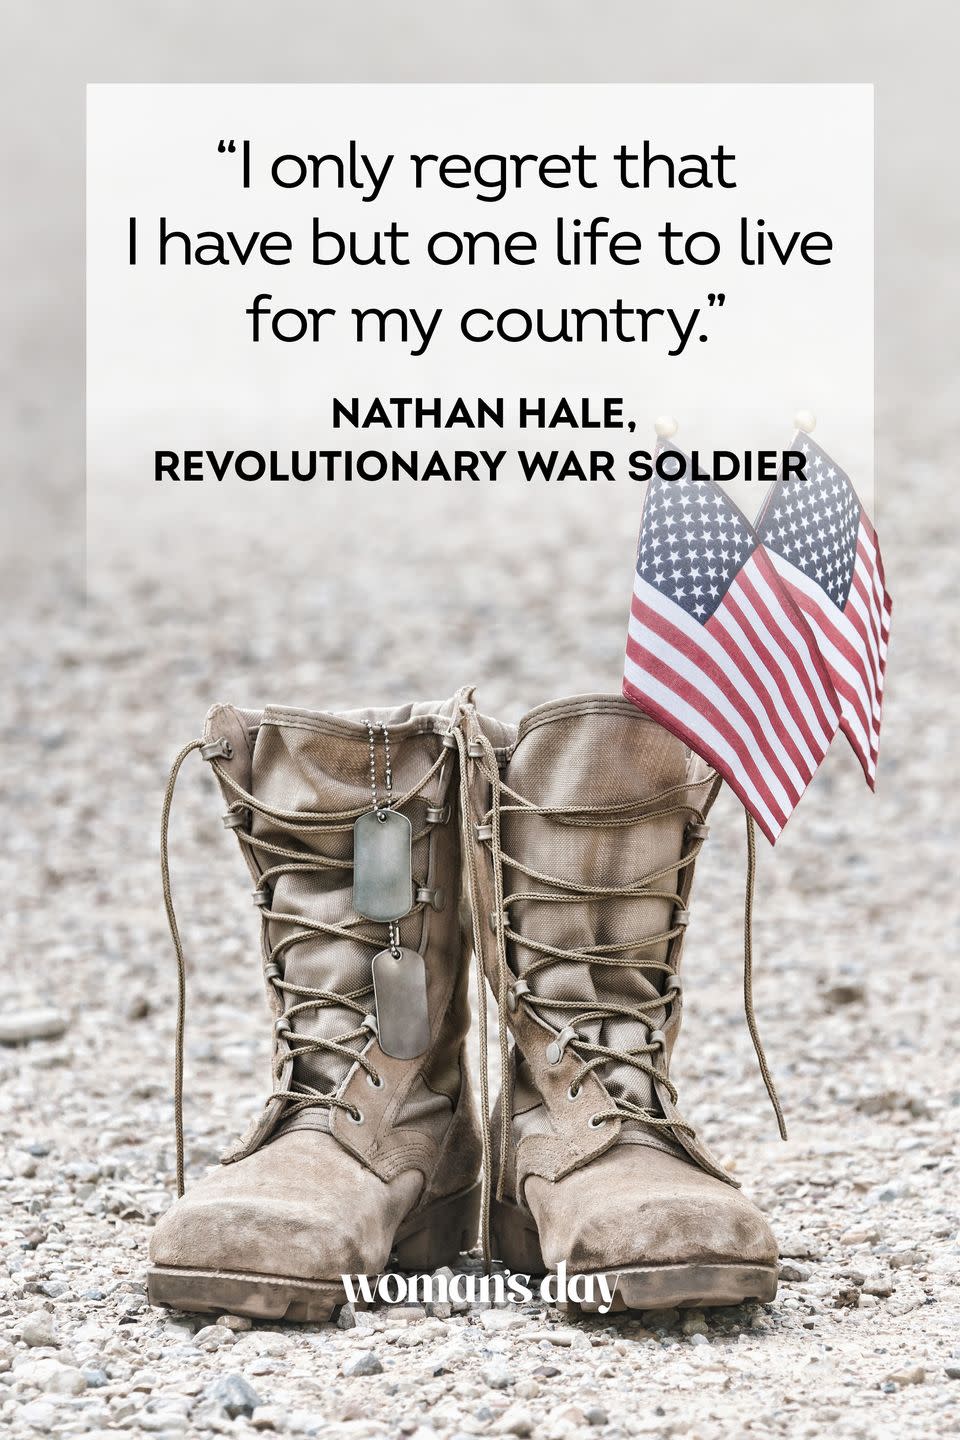 3) Nathan Hale, Revolutionary War soldier